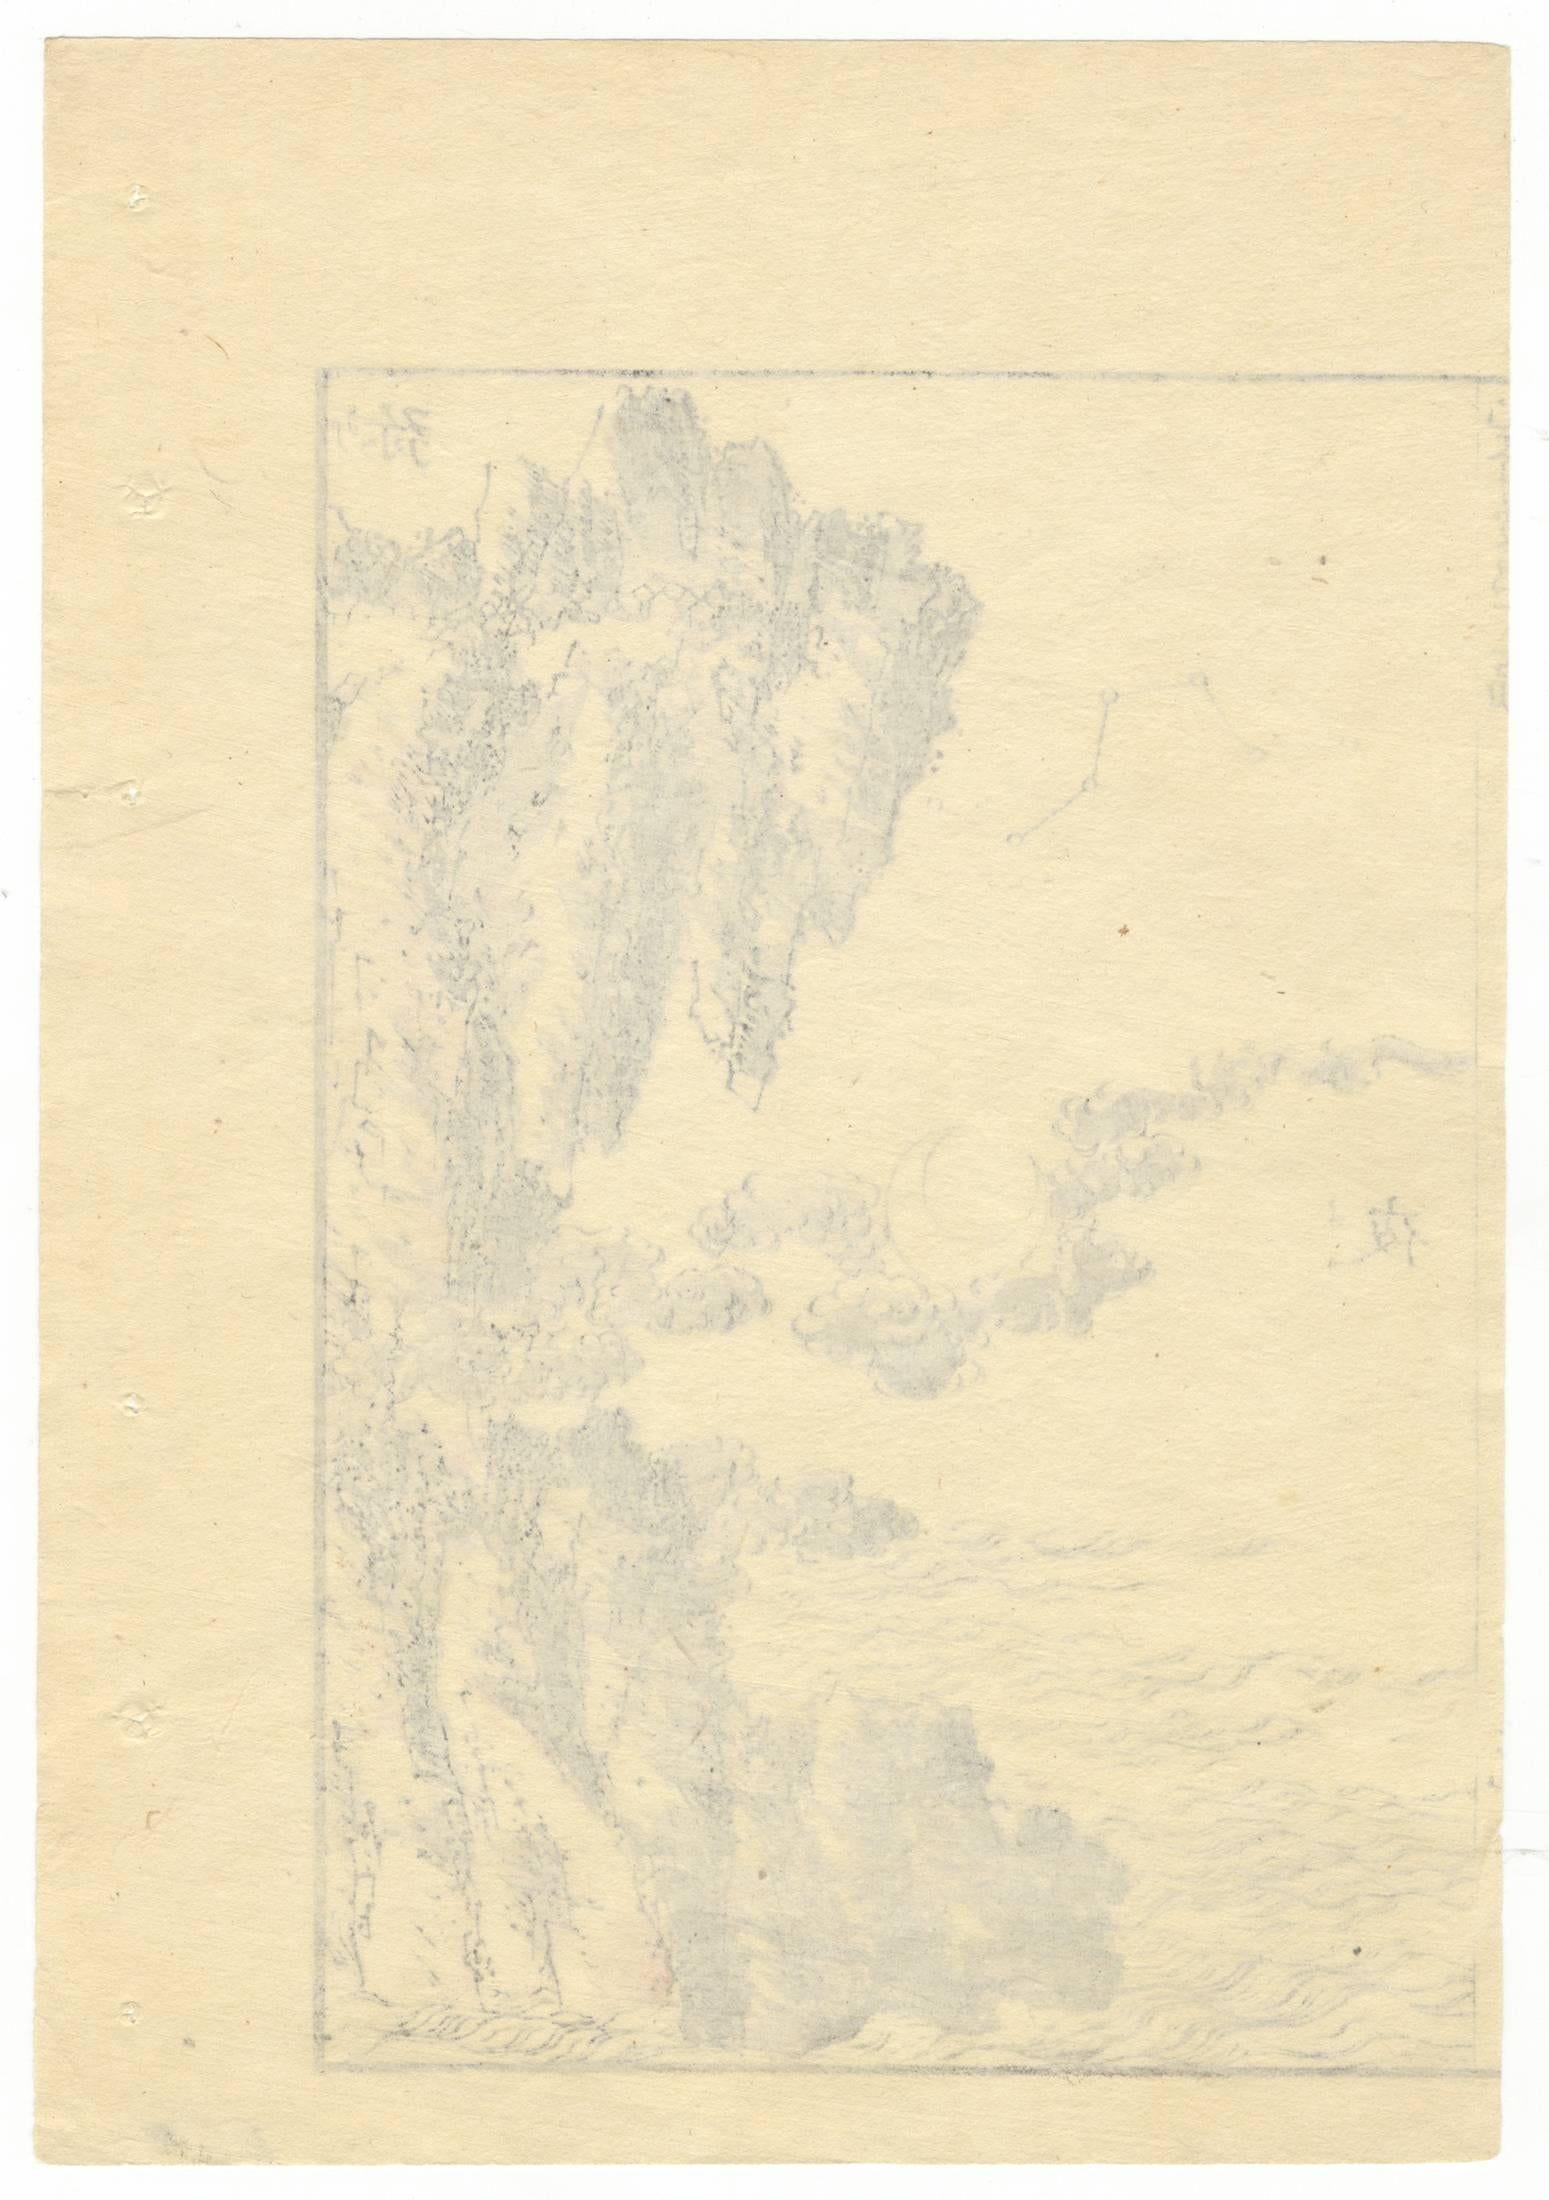 Hand-printed on traditional Japanese washi paper (mulberry tree paper).

Artist: Katsushika Hokusai
Title: Big Dipper 
Series: Hokusai Manga Volume
Publisher: Toheki-do
Published: 

This print is from the Hokusai Manga (sketches) series published in